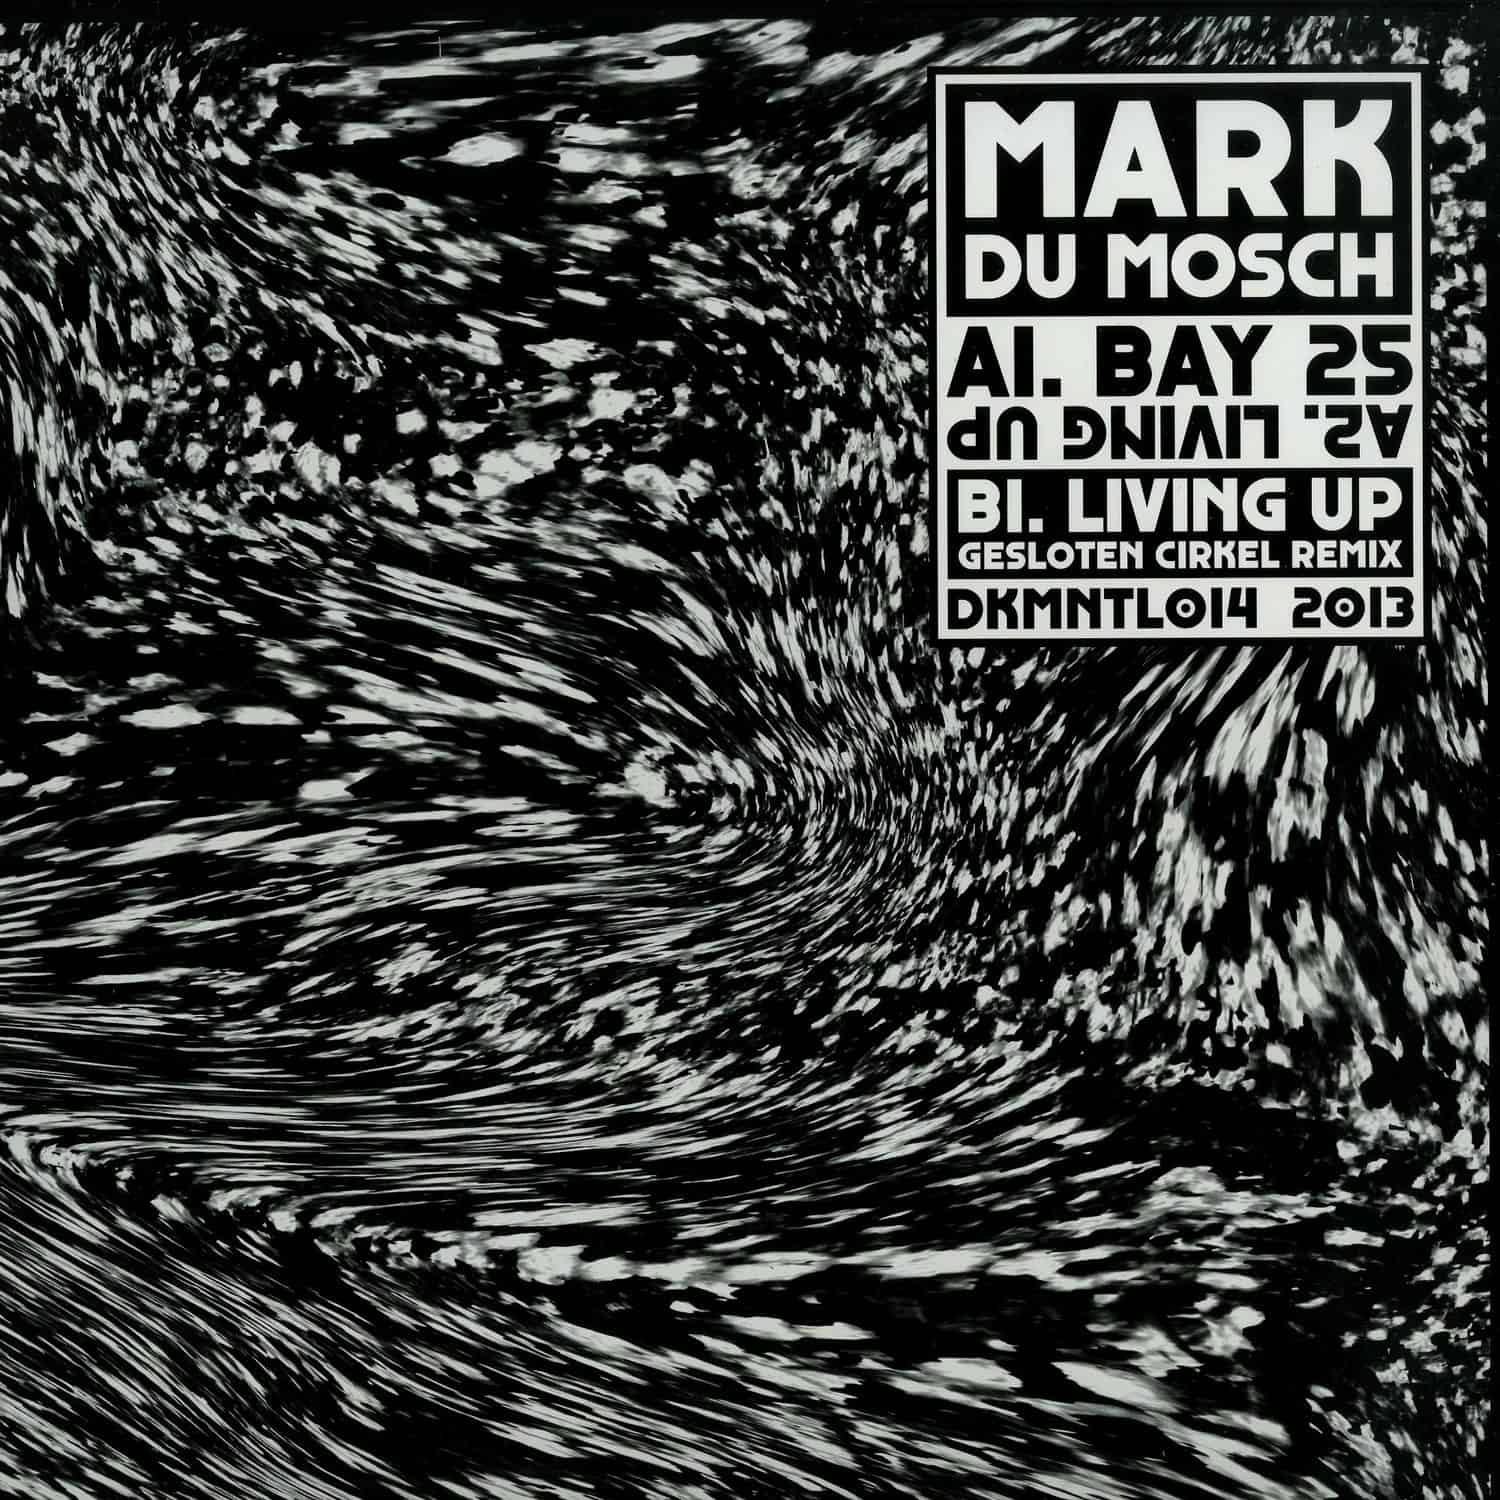 Mark Du Mosch - BAY 25 